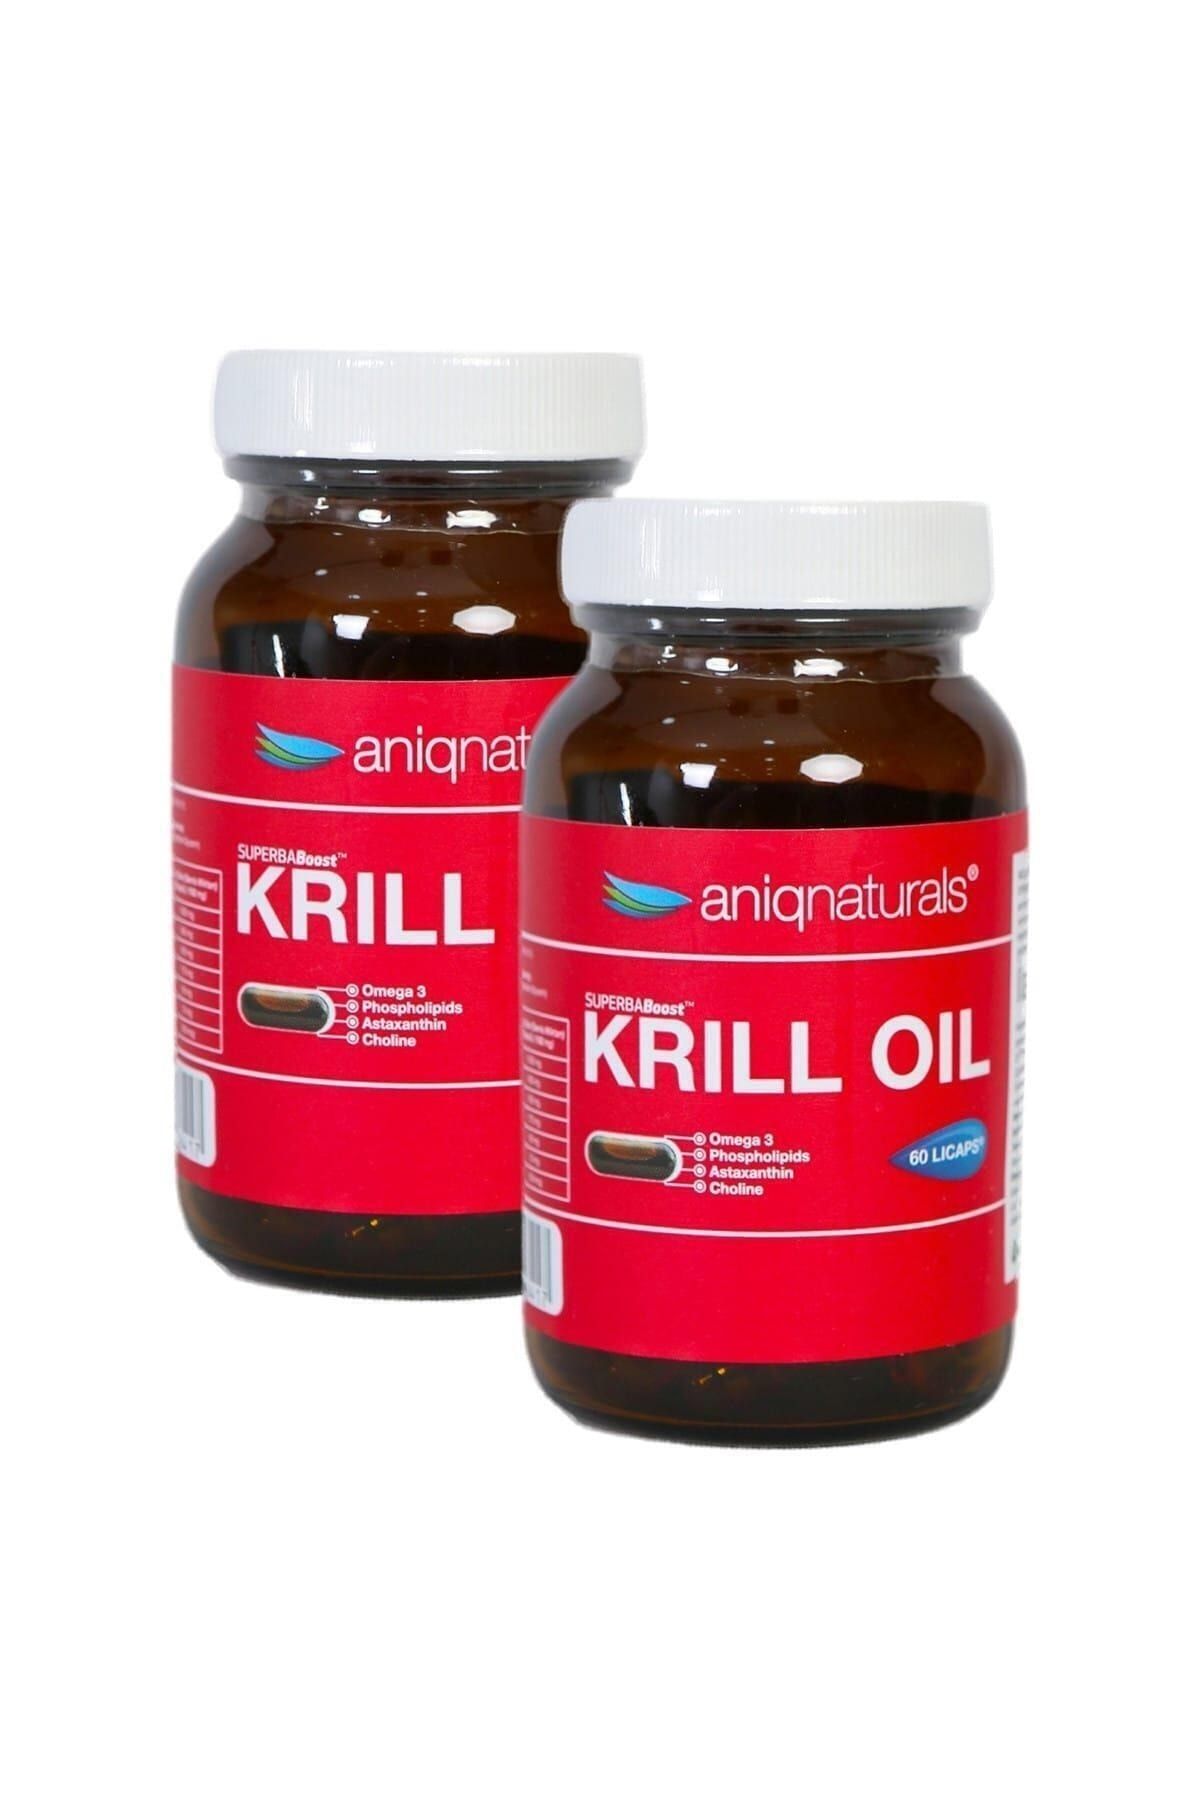 Aniqnaturals Superbaboost Krill Oil 60 Licaps- Cam Şişe 2 Adet